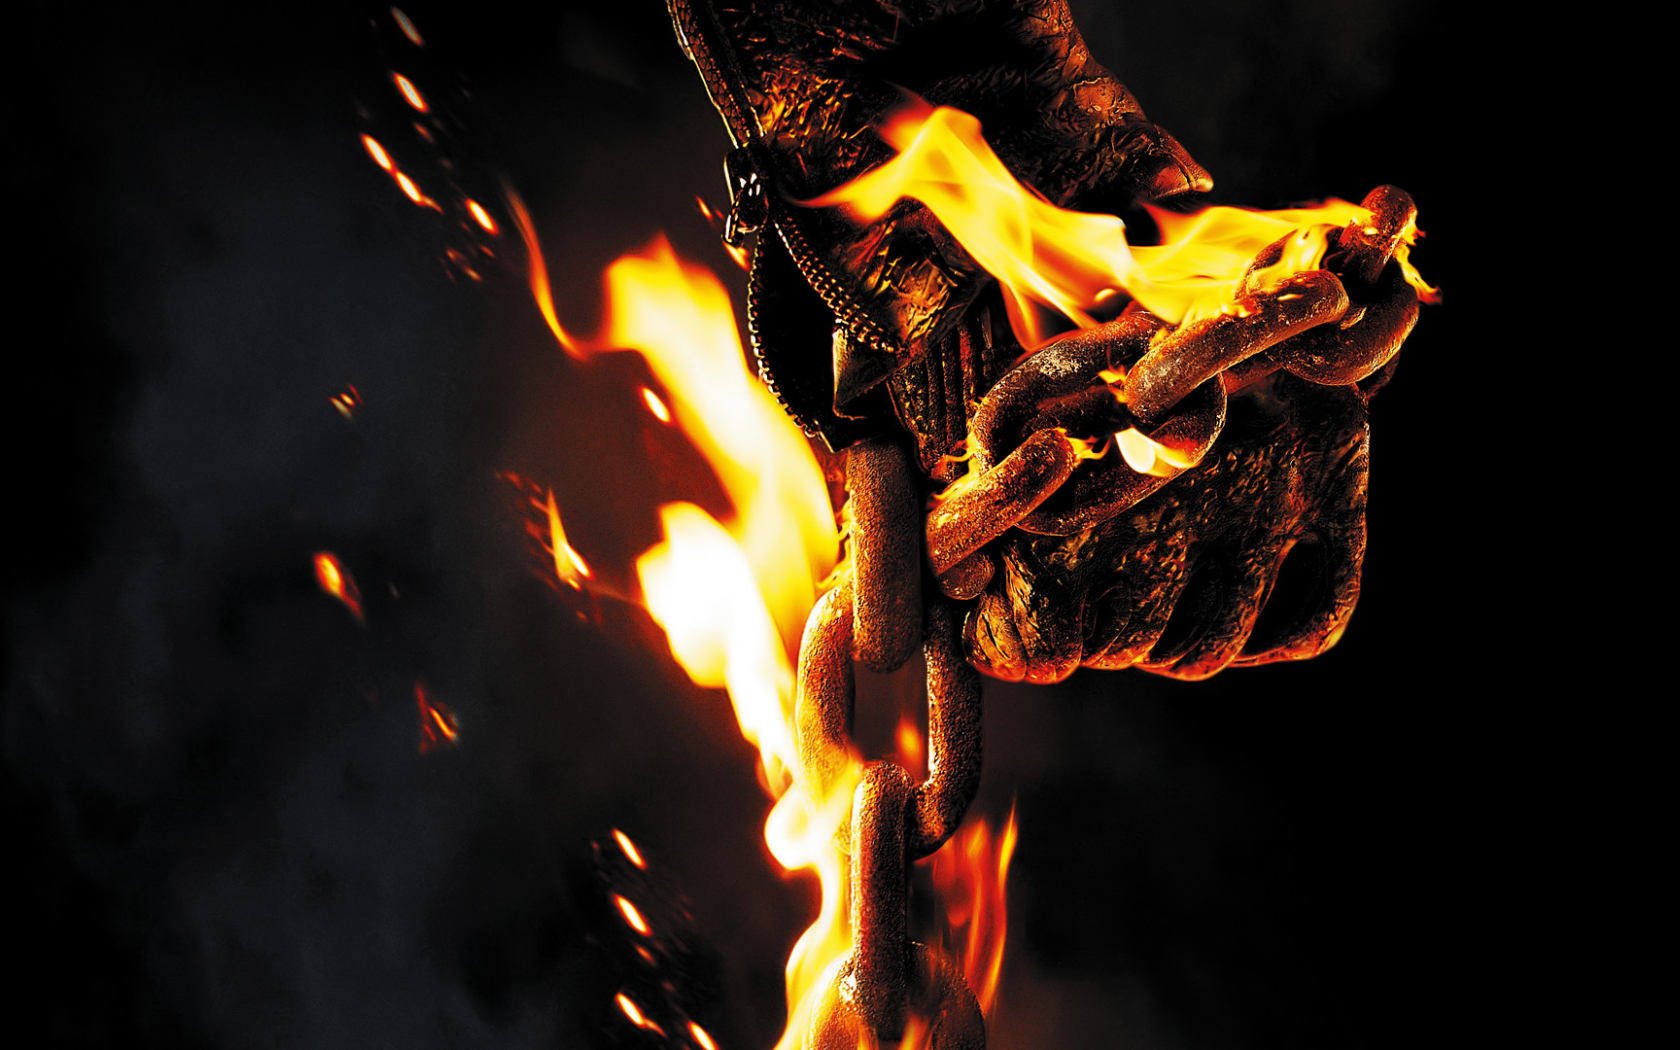 Download 1680x1050 Wallpaper Ghost Rider: Spirit Of Vengeance Movie, Hands,  Chain, Fire, Widescreen 16:10, Widescreen, 1680x1050 Hd Image, Background,  9735